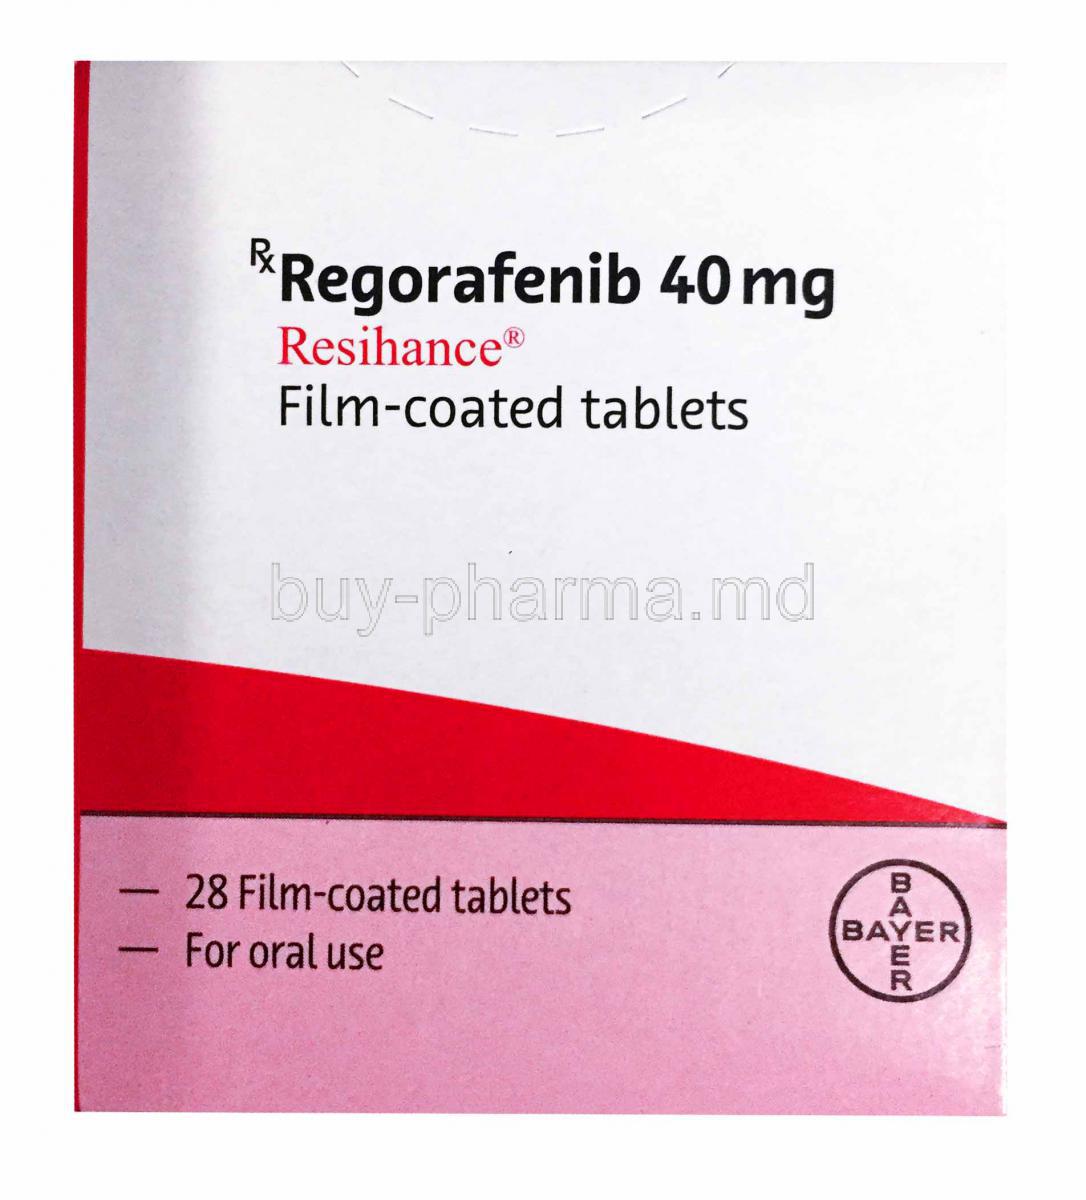 Resihance, Regorafenib 40mg, Bayer, 20 tabs, Box front presentation